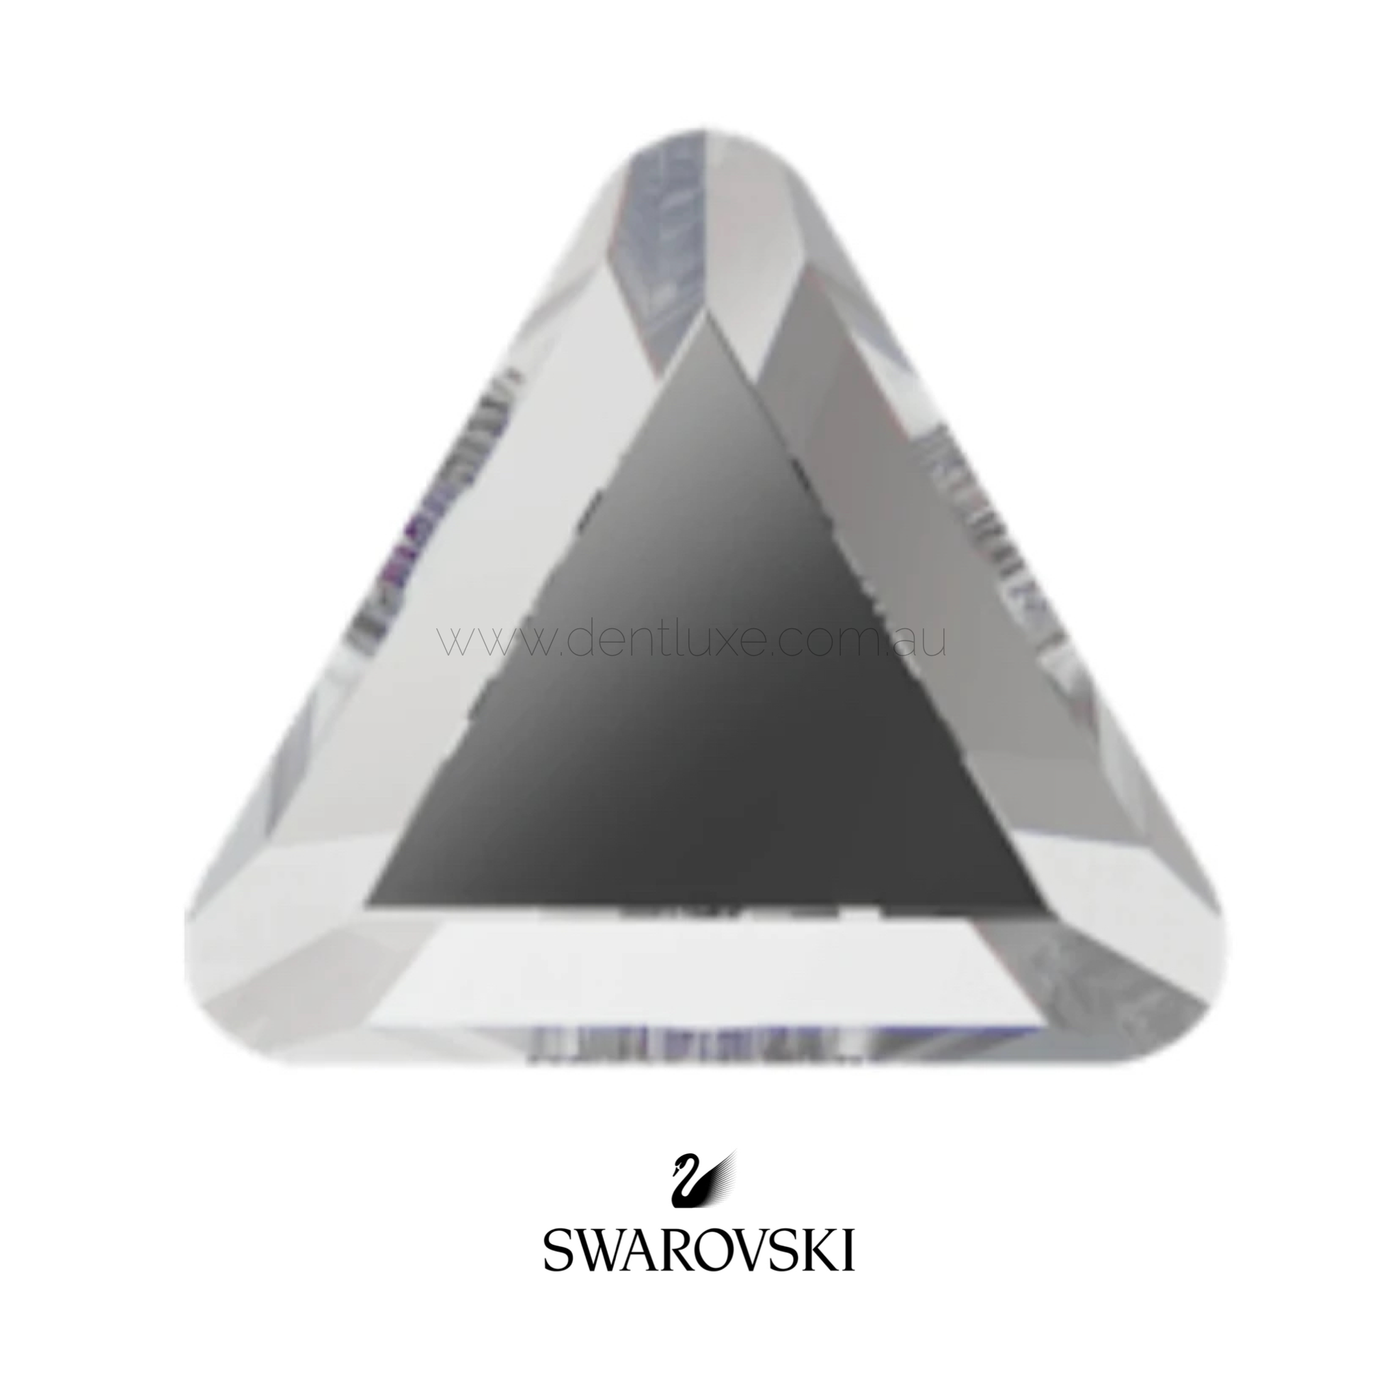 Swarovski Crystals Triangle Tooth Gem